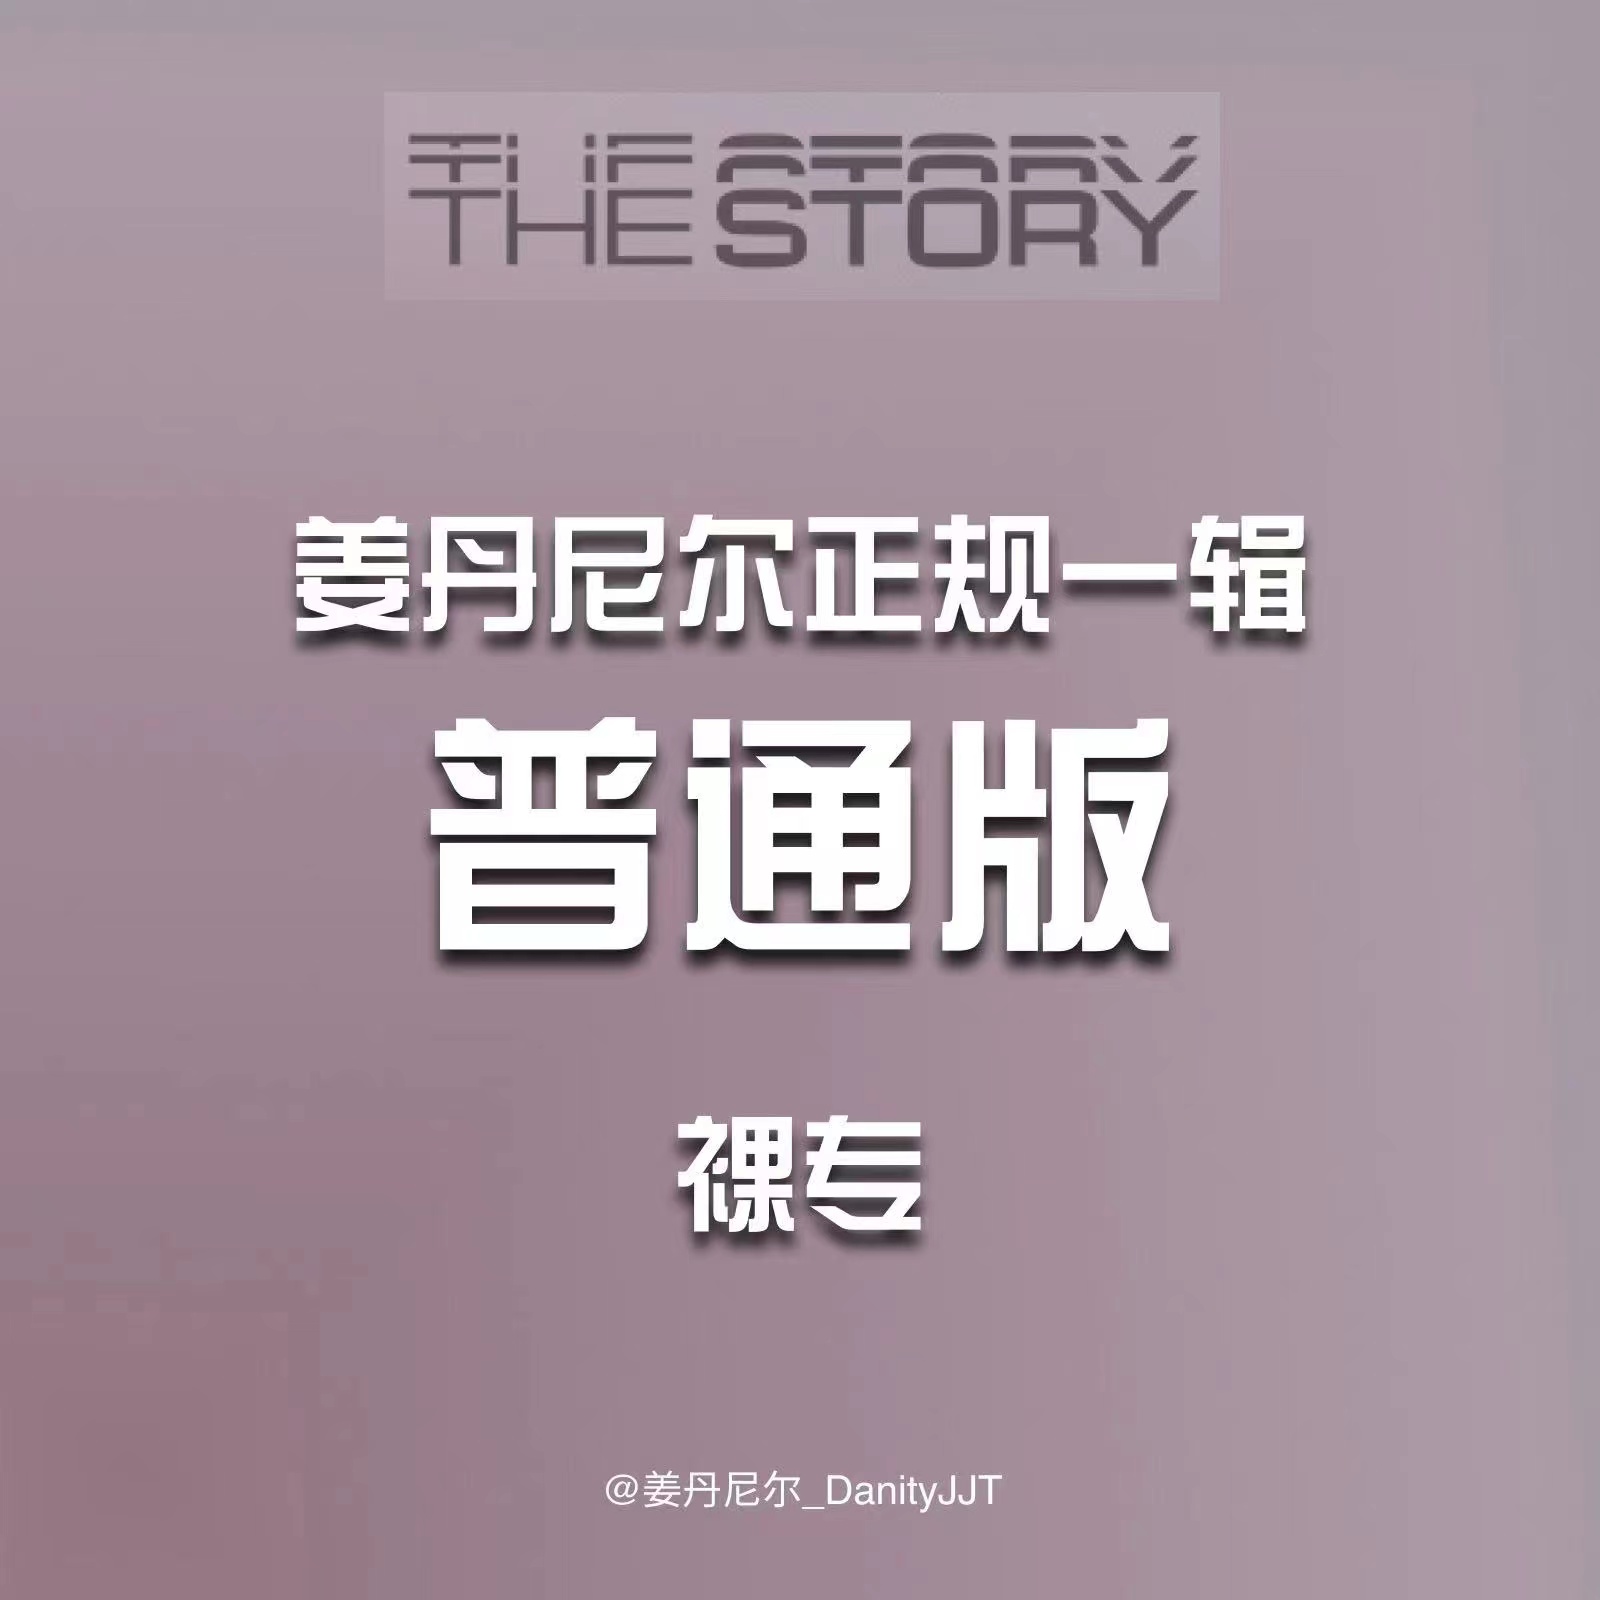 [全款 裸专] KANG DANIEL - 1st Full Album [The Story] (随机版本) *购买多张尽量发不同版本_姜丹尼尔_DanityJJT